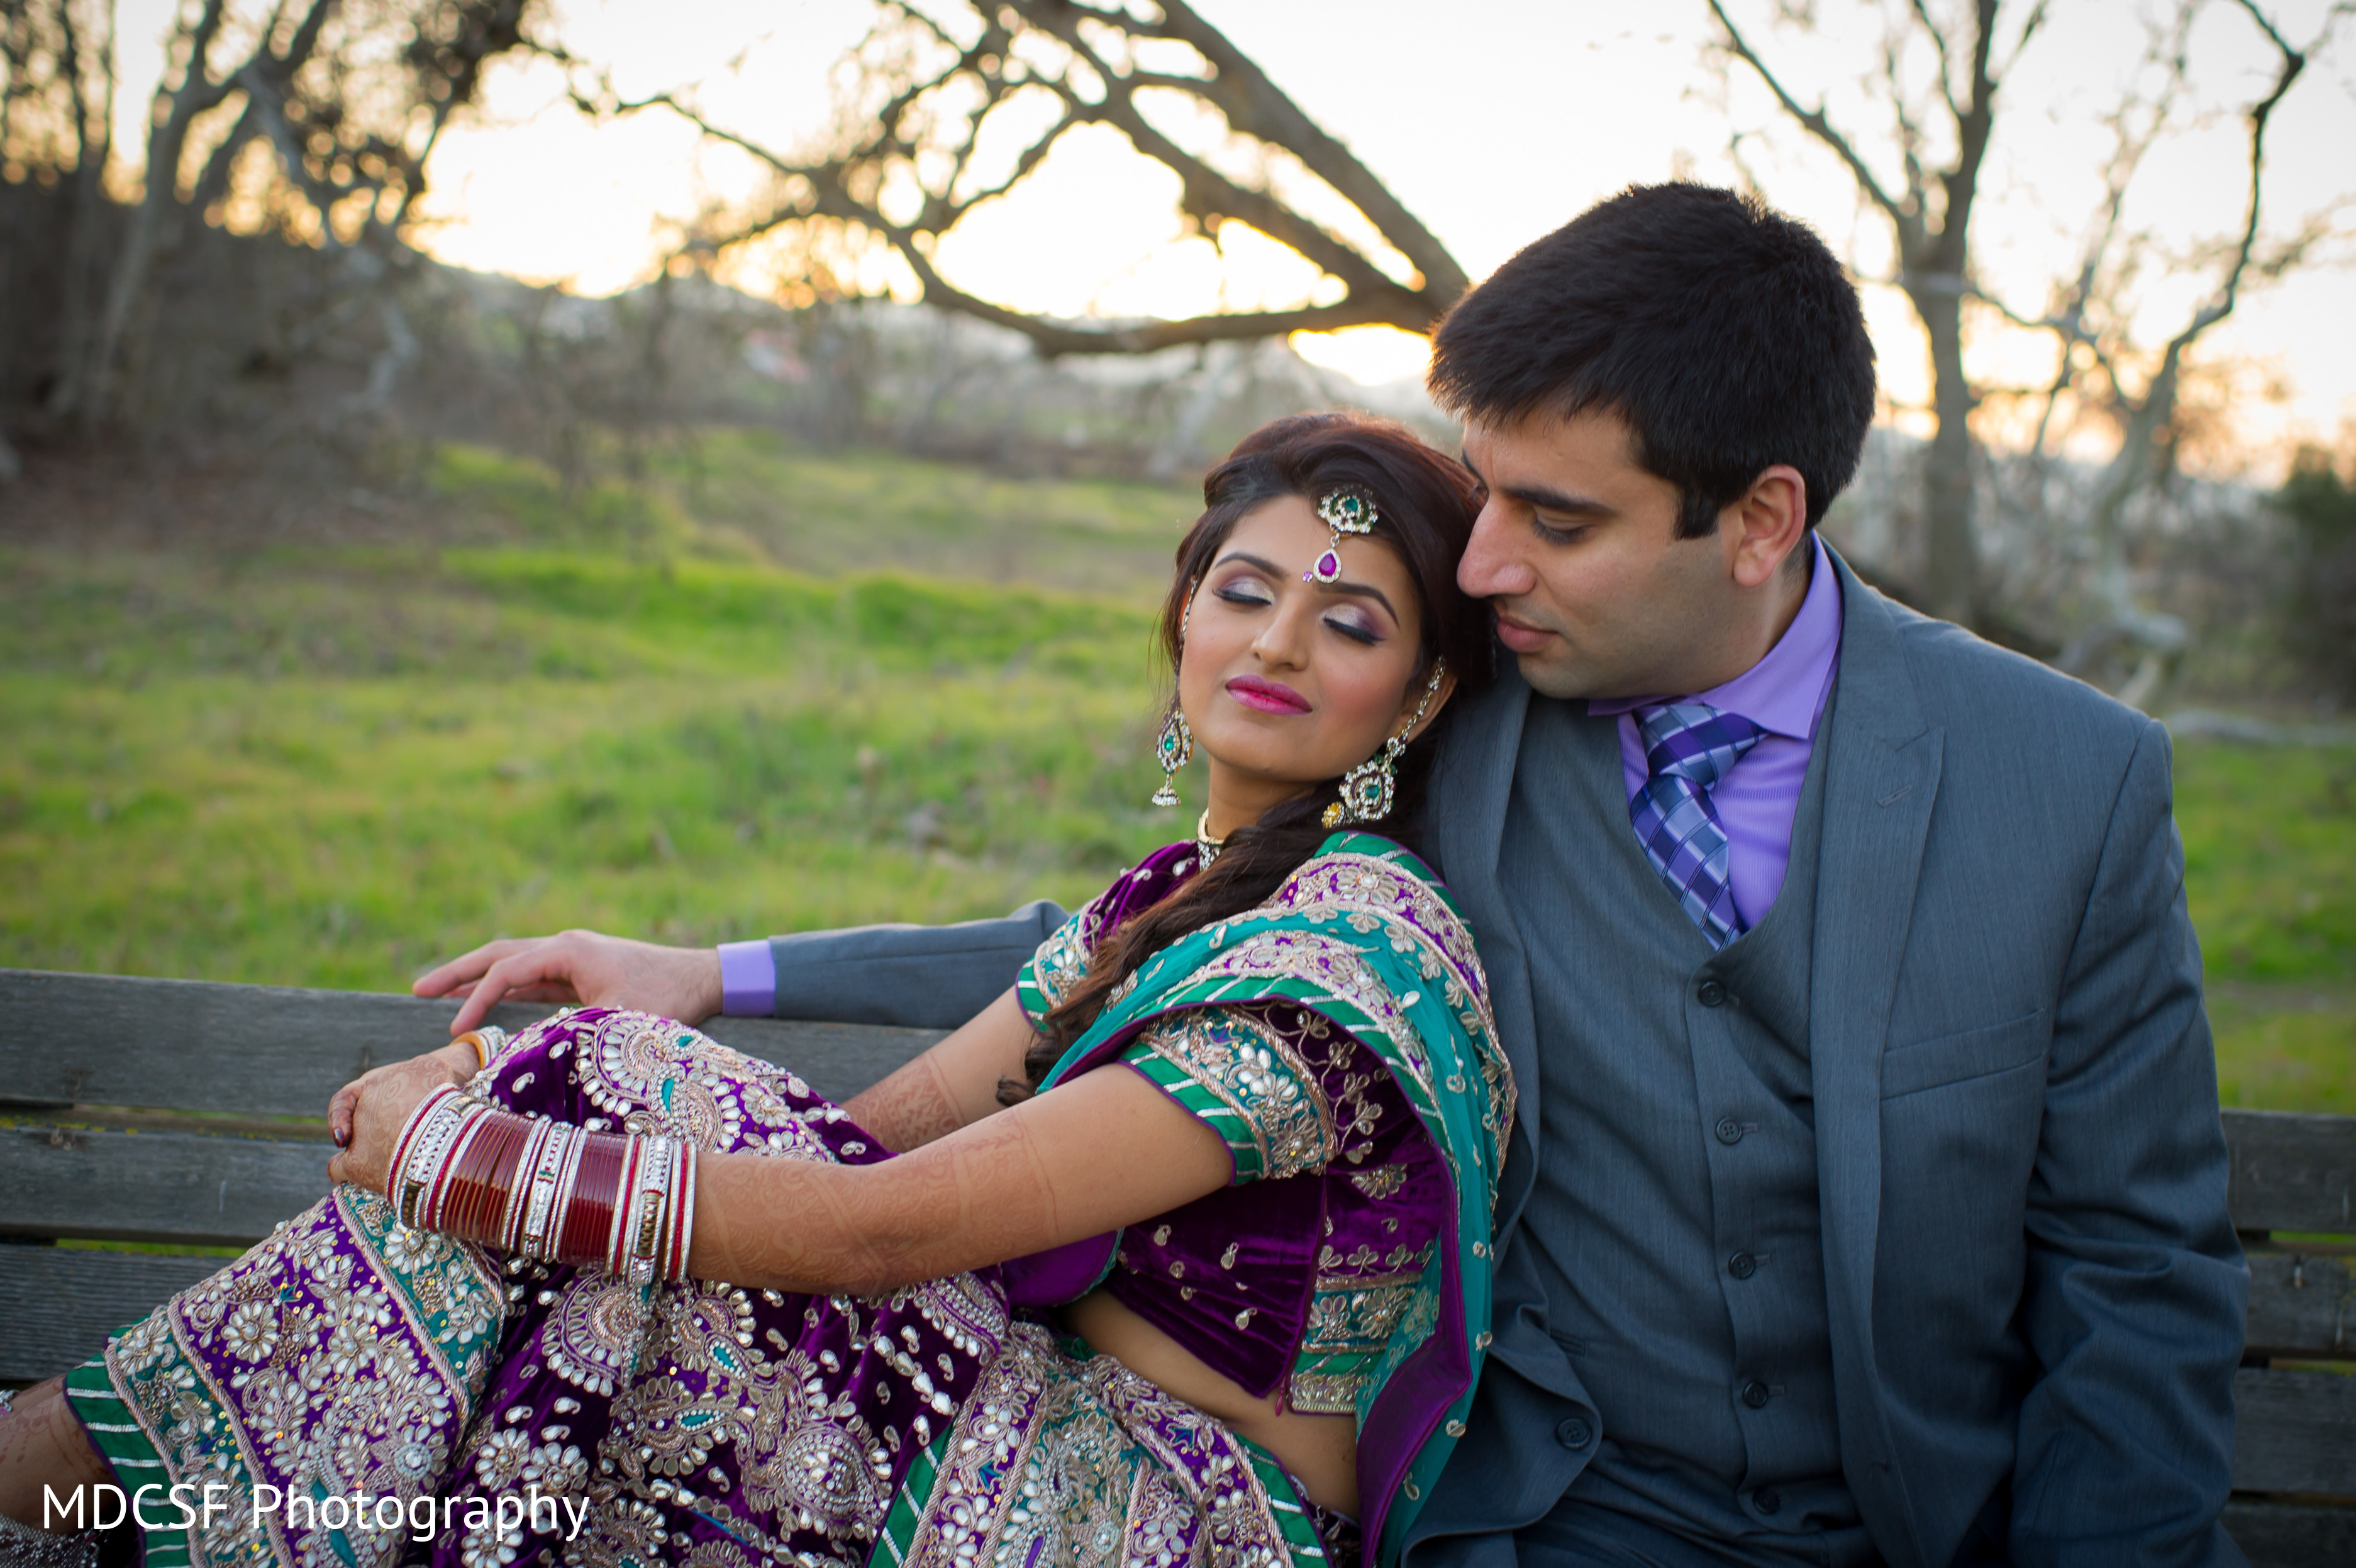 Baraat | Couple wedding dress, Bride, Indian wedding outfits